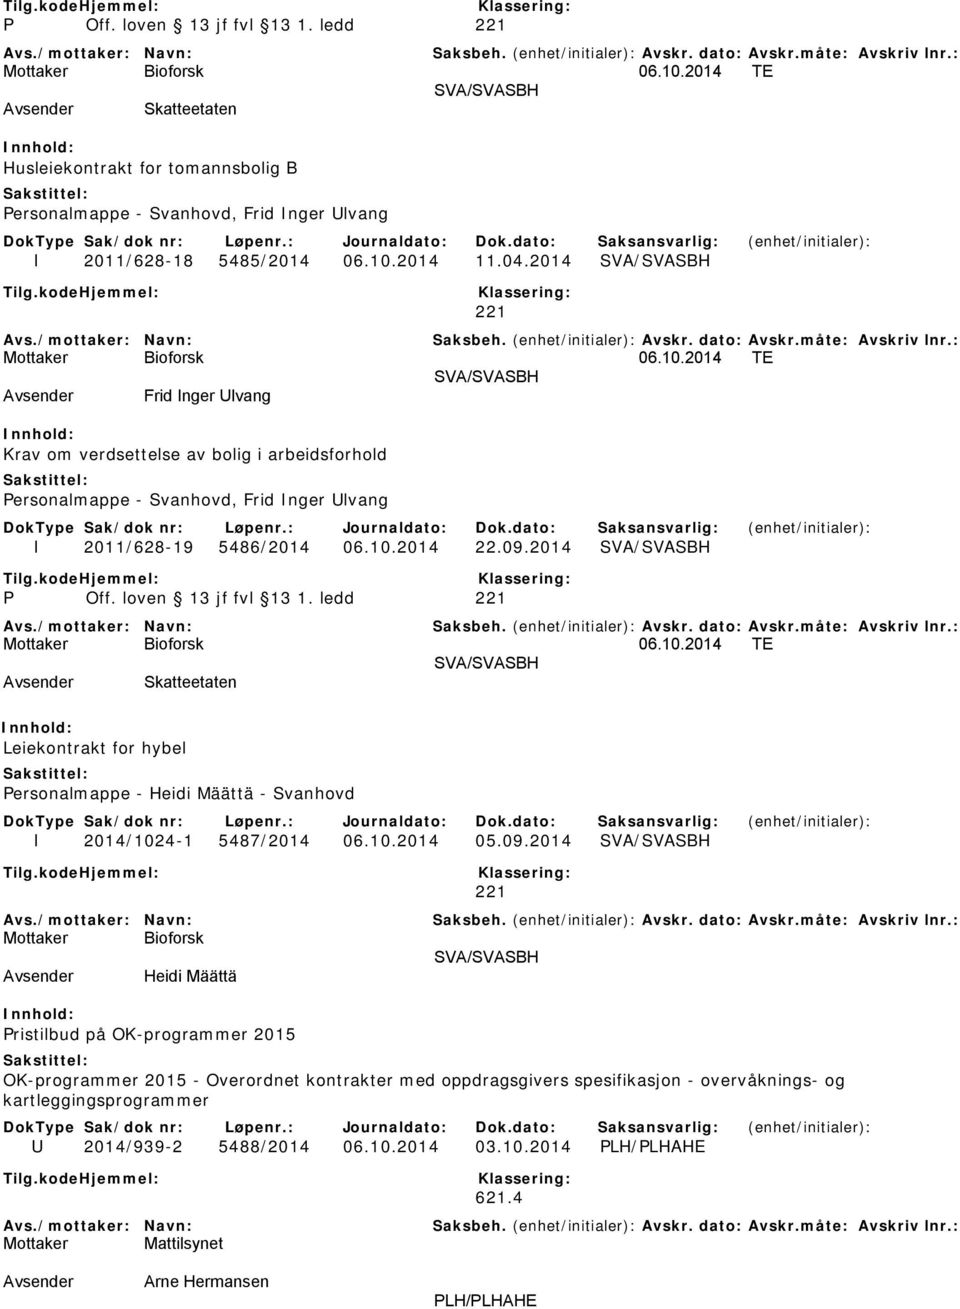 2014 P Off. loven 13 jf fvl 13 1. ledd 221 06.10.2014 TE Skatteetaten Leiekontrakt for hybel Personalmappe - Heidi Määttä - Svanhovd I 2014/1024-1 5487/2014 06.10.2014 05.09.